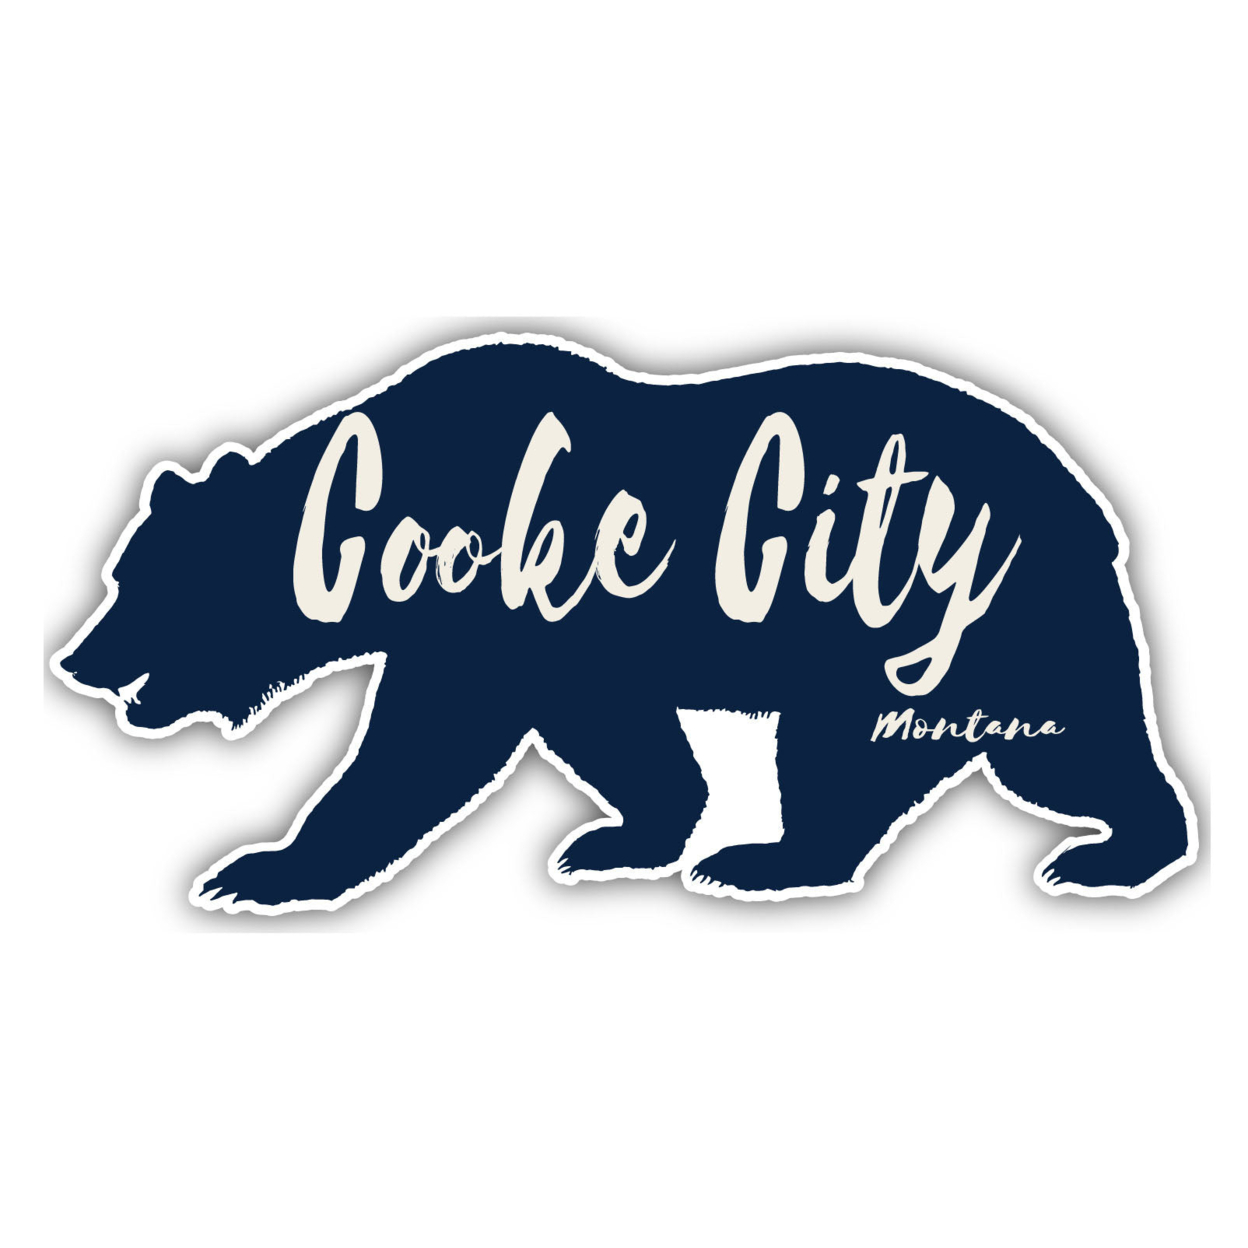 Cooke City Montana Souvenir Decorative Stickers (Choose Theme And Size) - Single Unit, 4-Inch, Bear